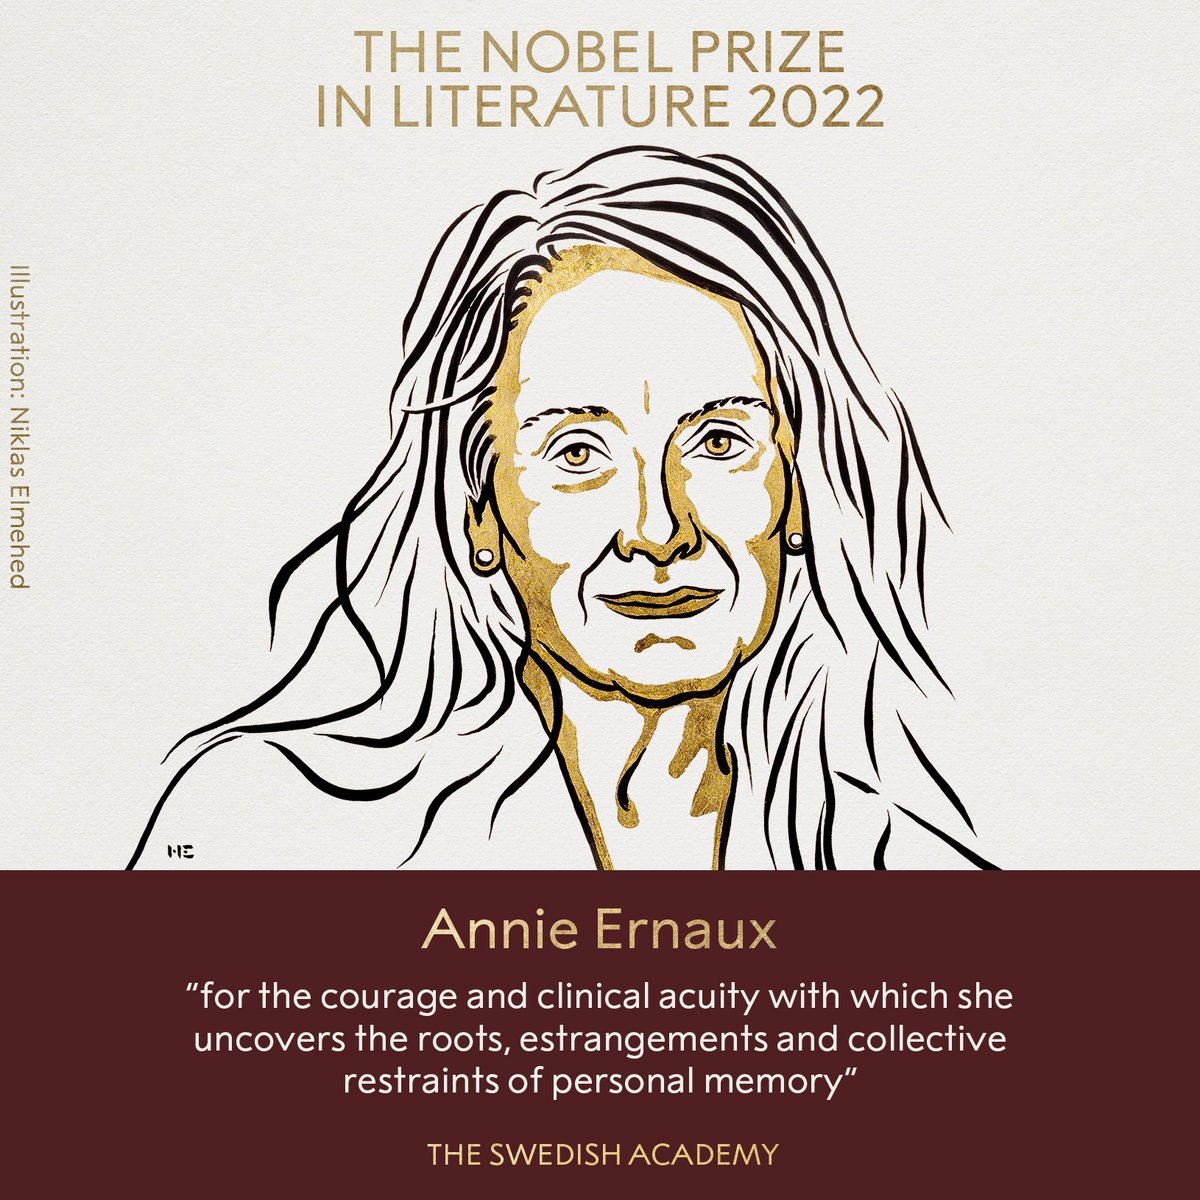 @NobelPrize's photo on Annie Ernaux